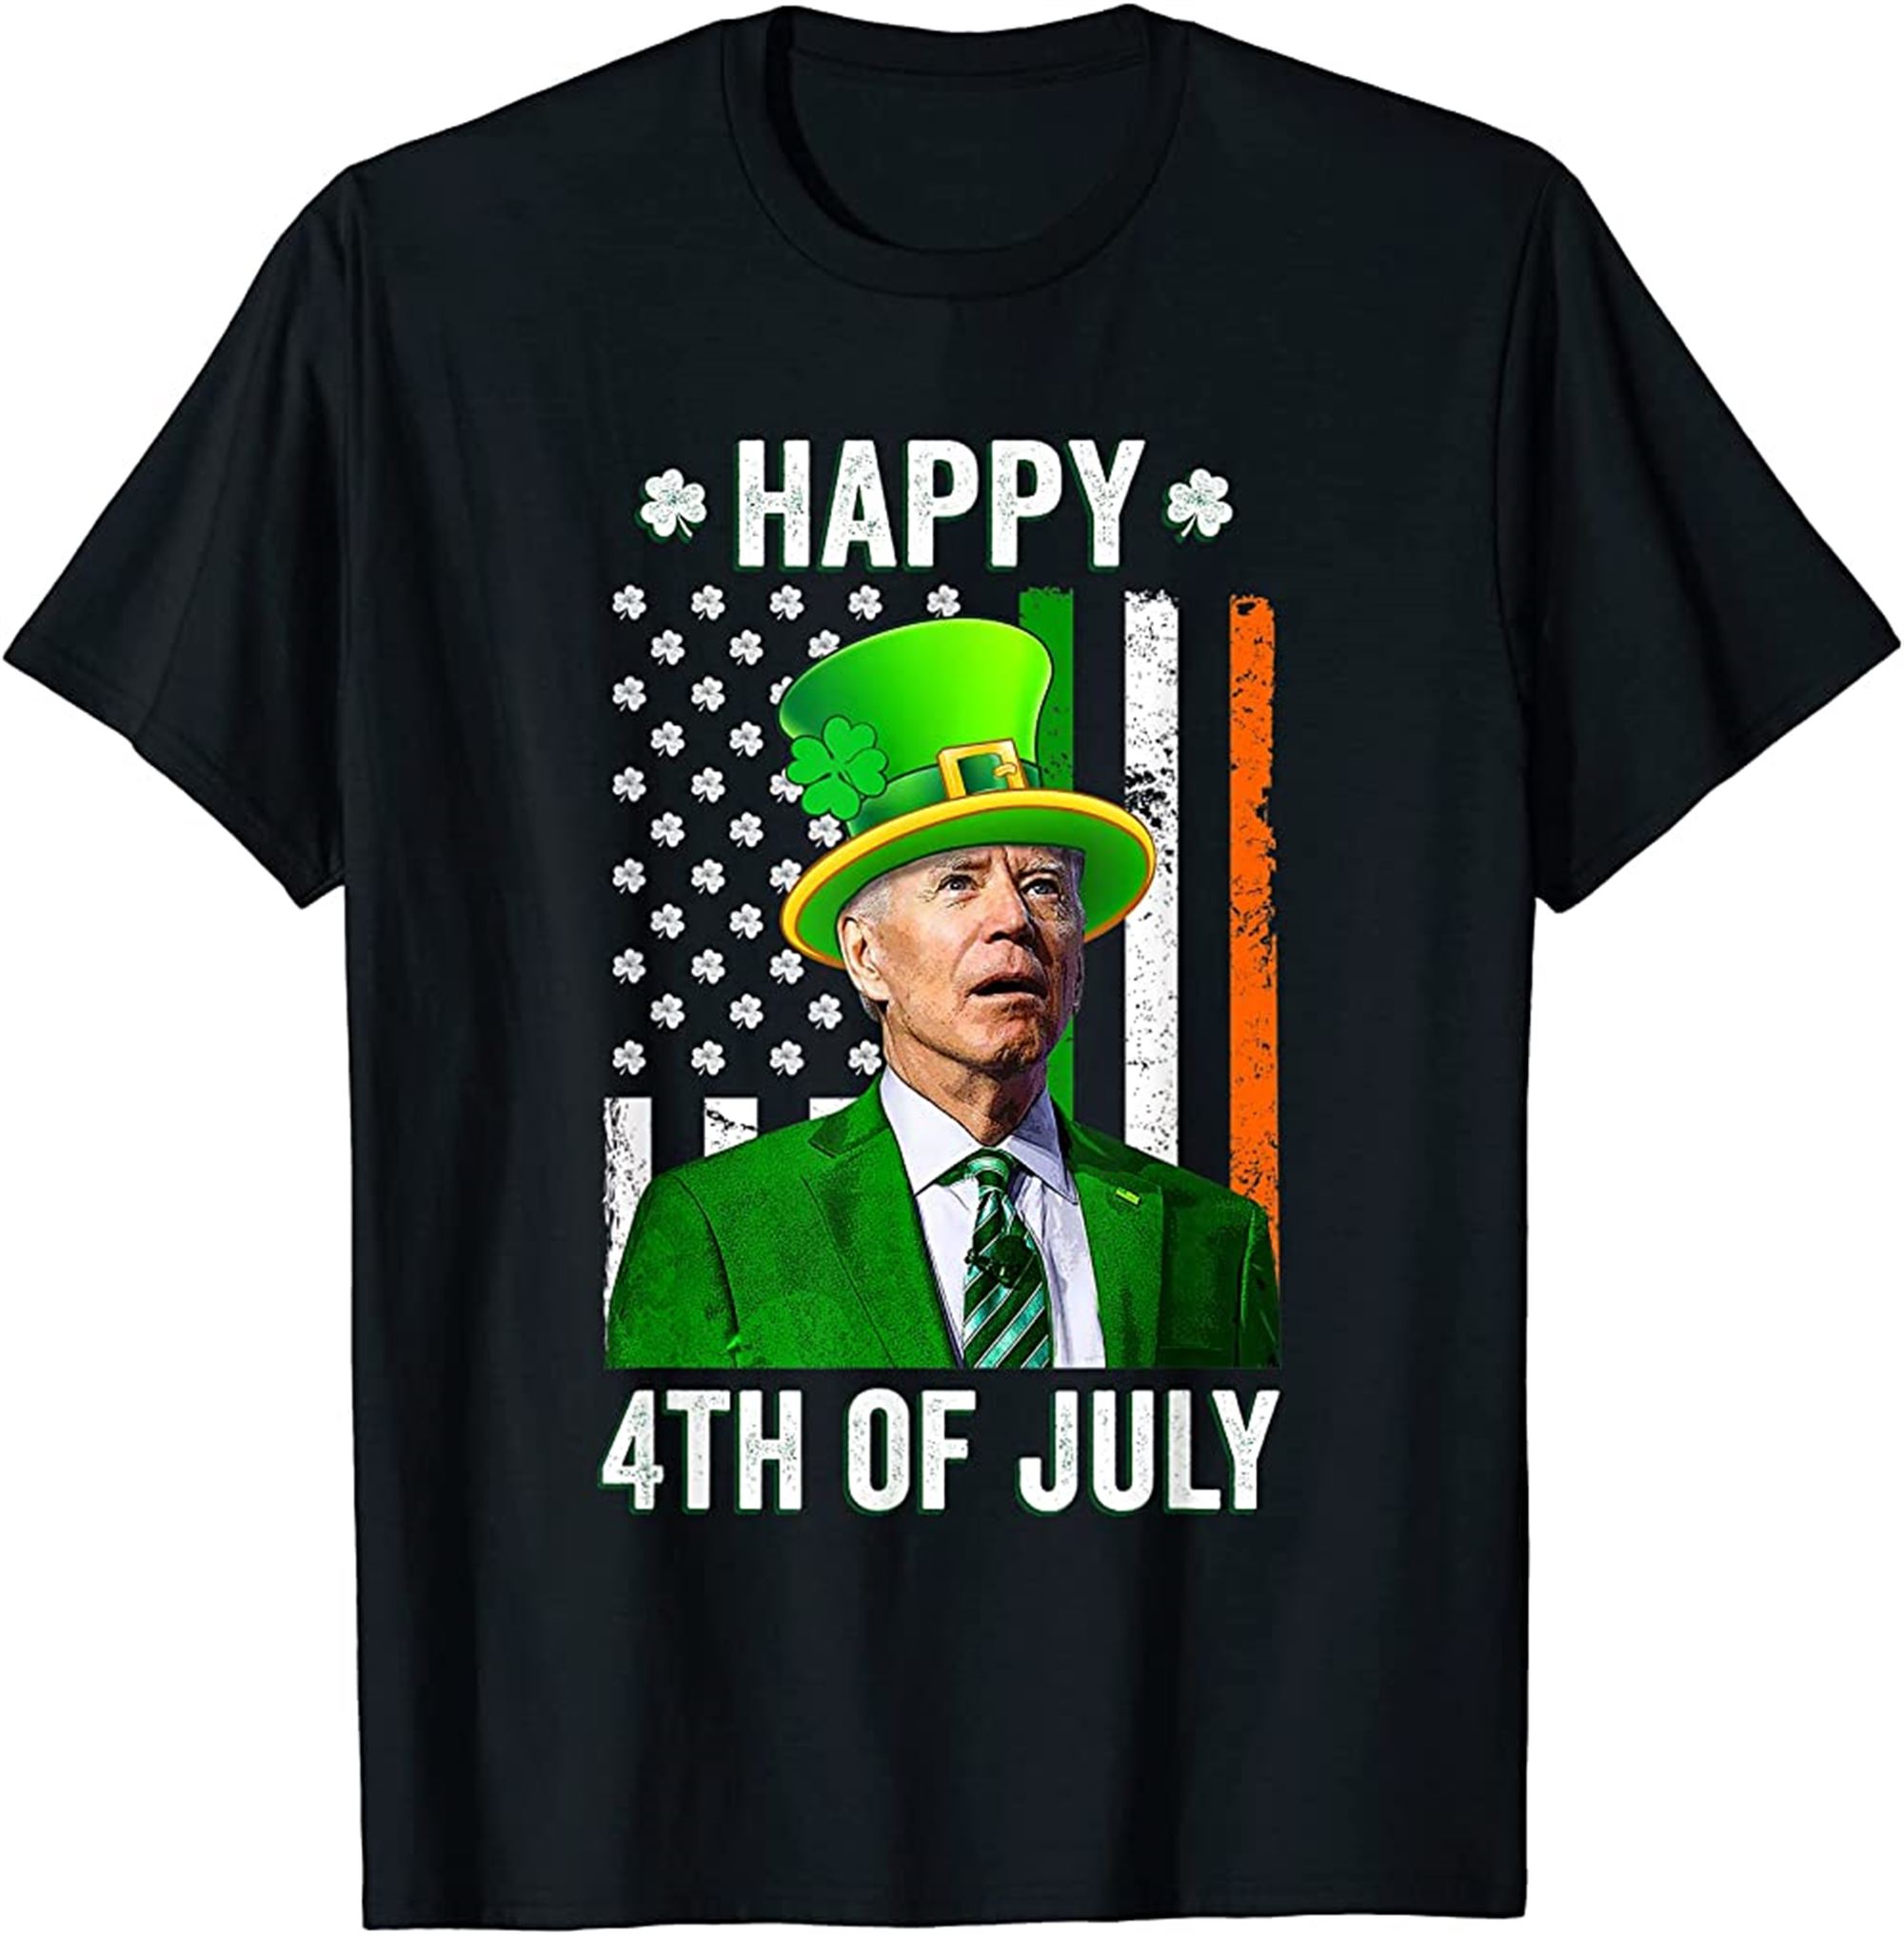 Happy 4th Of July Joe Biden St Patricks Day Leprechaun Hat T-shirt Size Up To 5xl